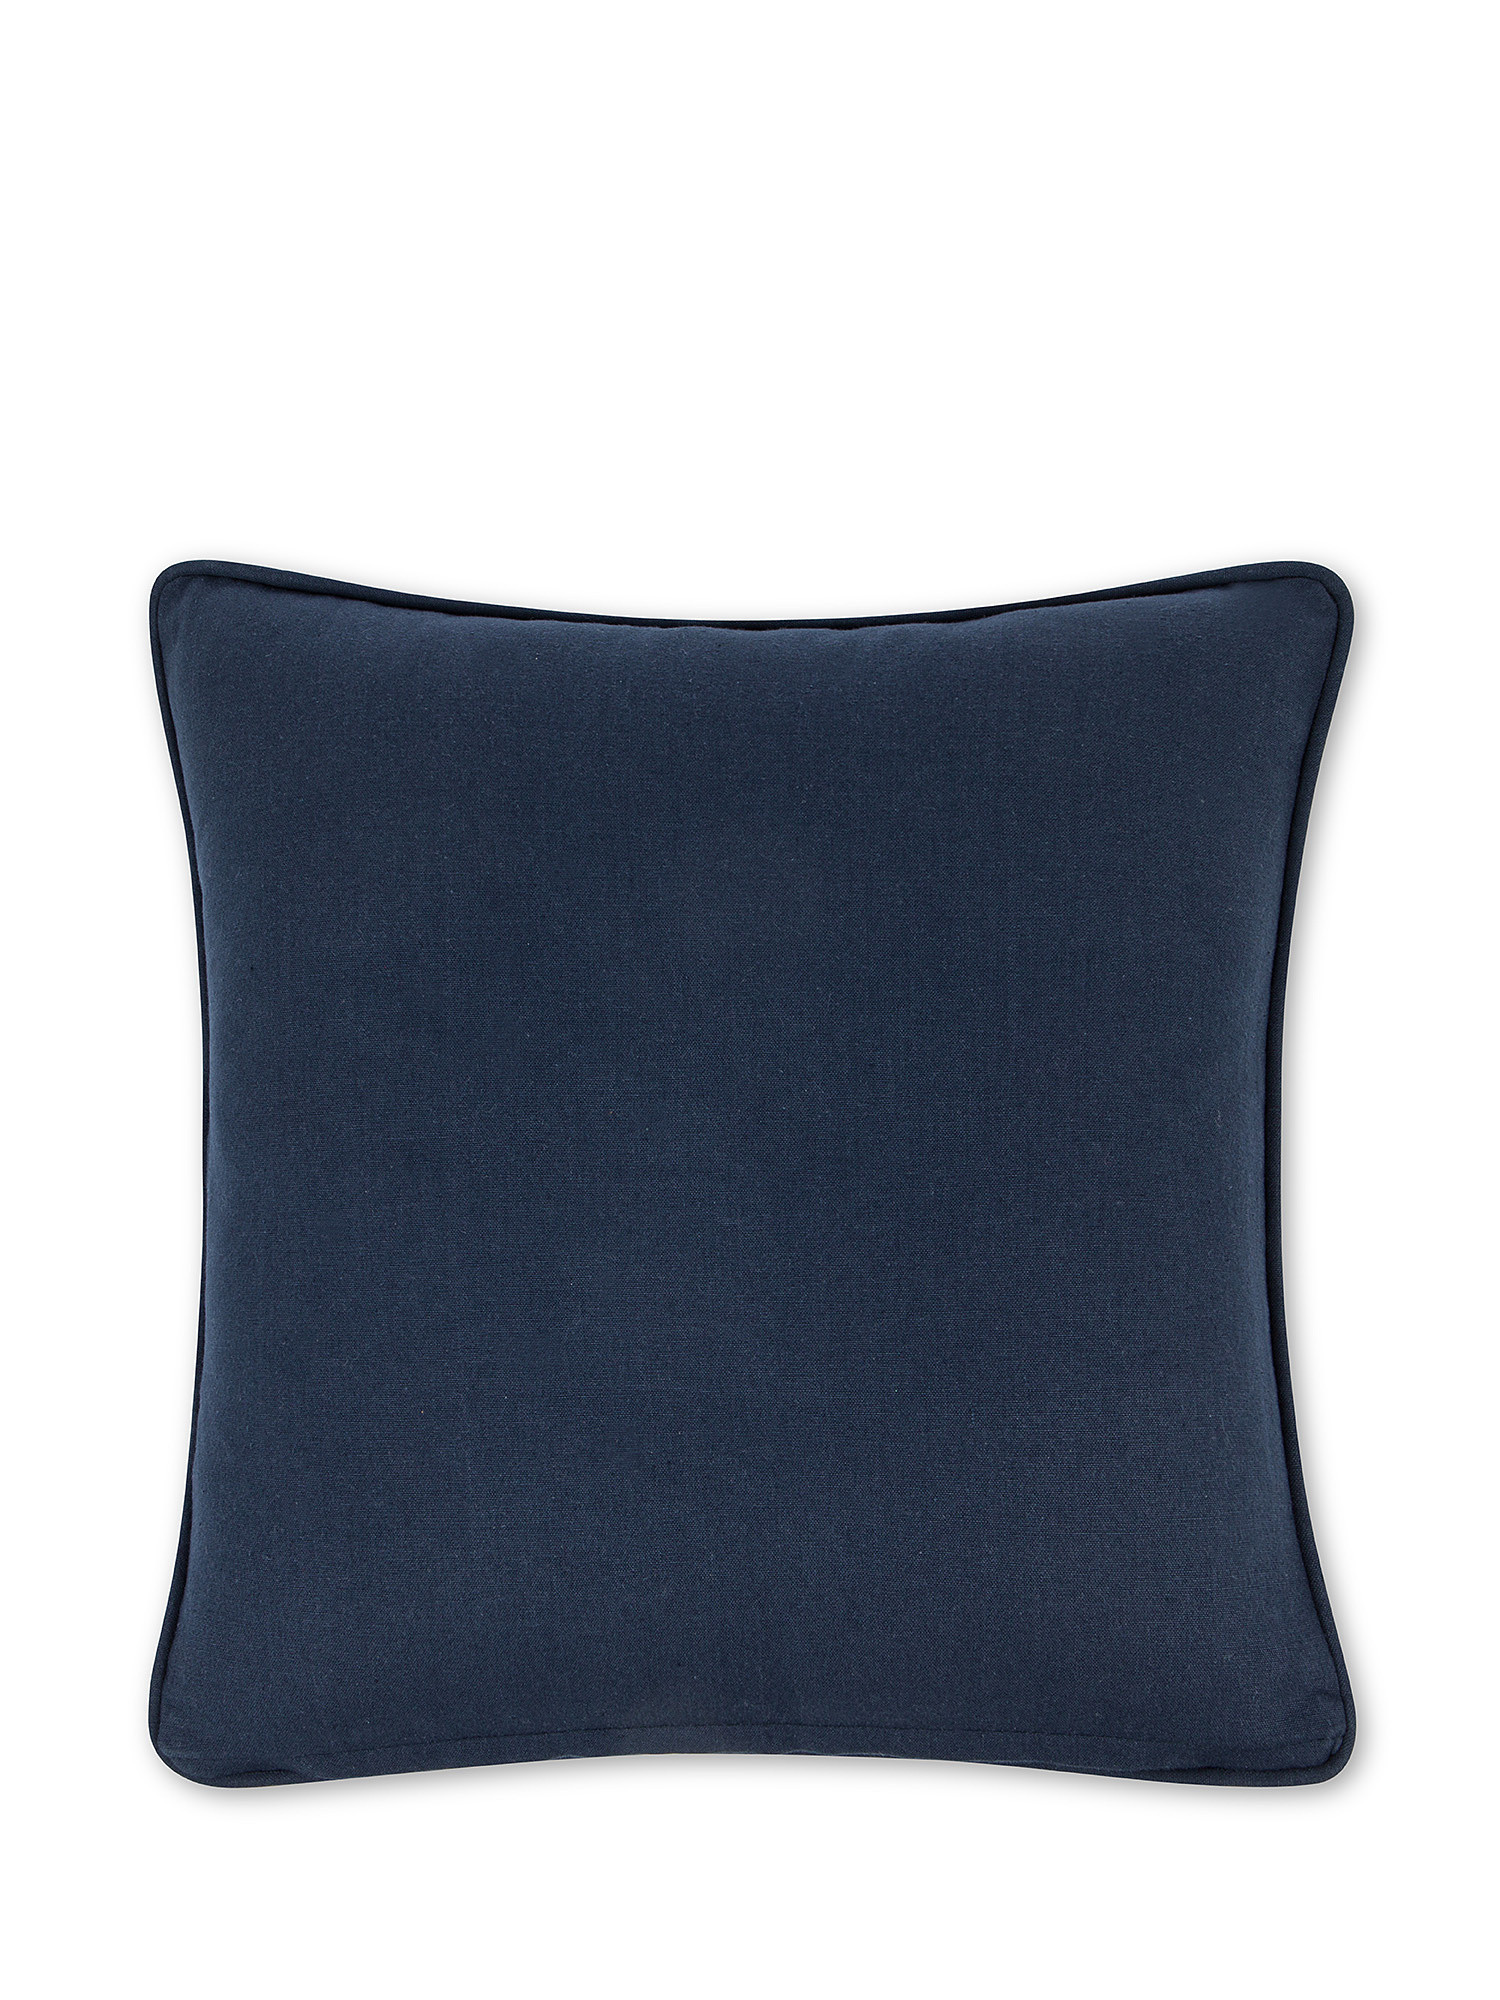 Cuscino 45x45 cm in cotone con ricami, Bianco/Blu, large image number 1